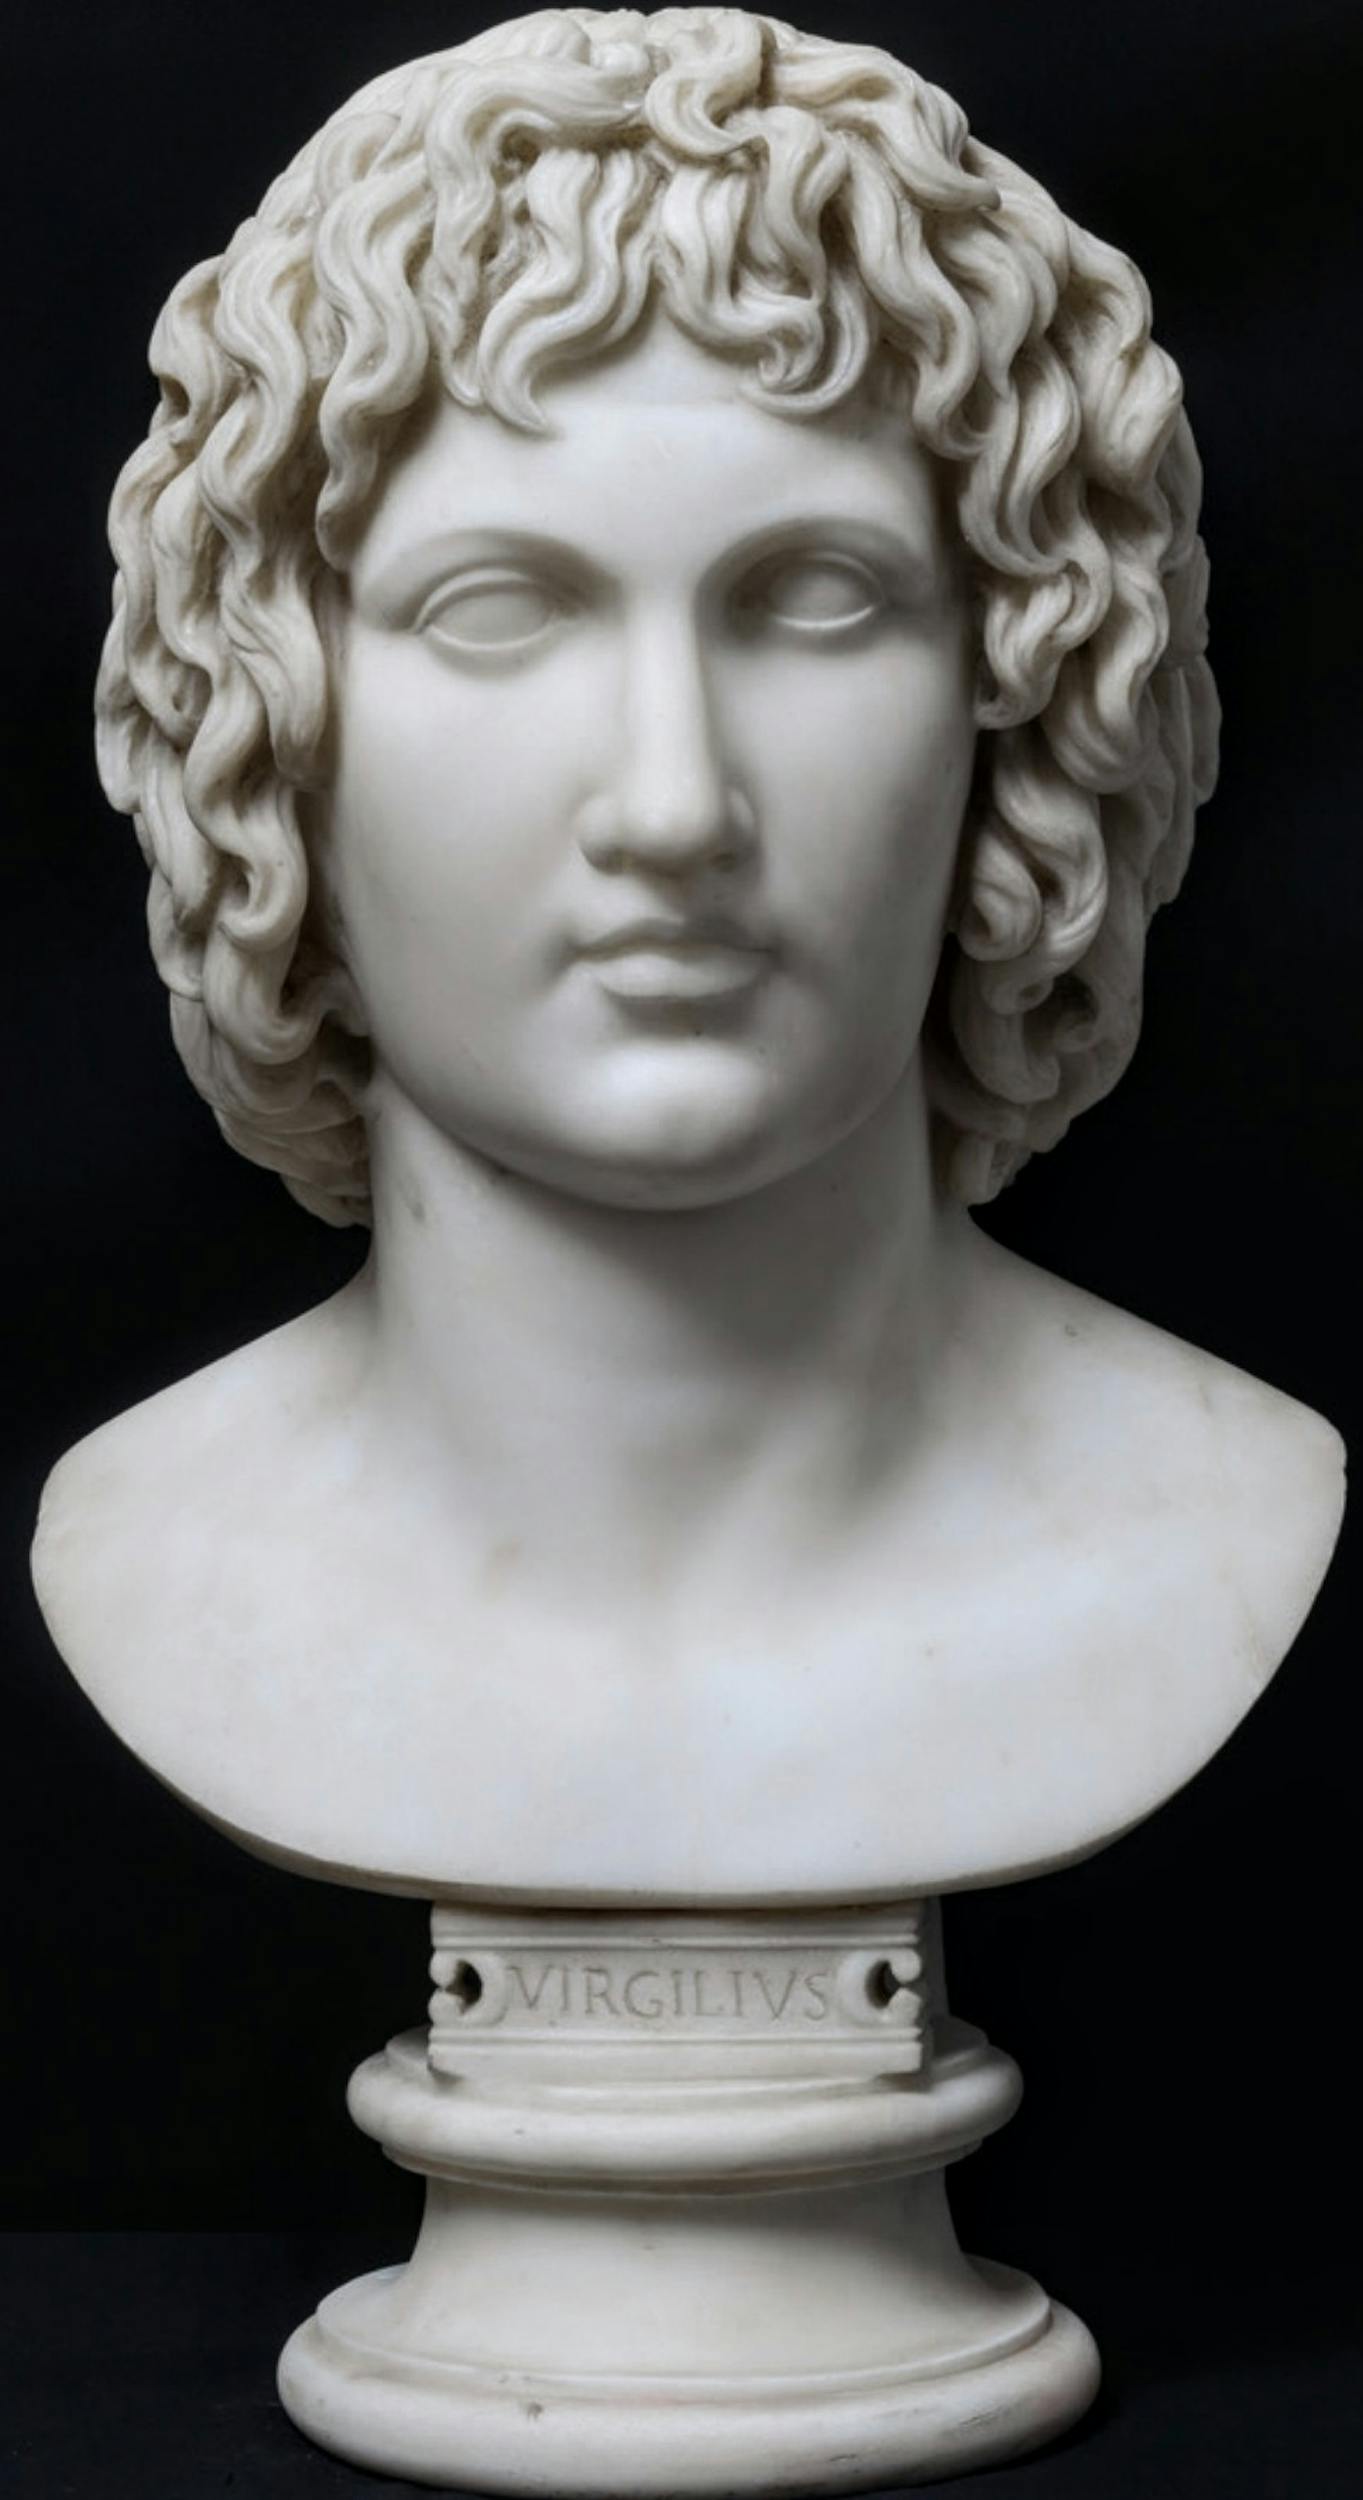 Carlo Albacini (Roma 1734 - 1813)  Busto di Virgilio  1790 circa  marmo  58 cm